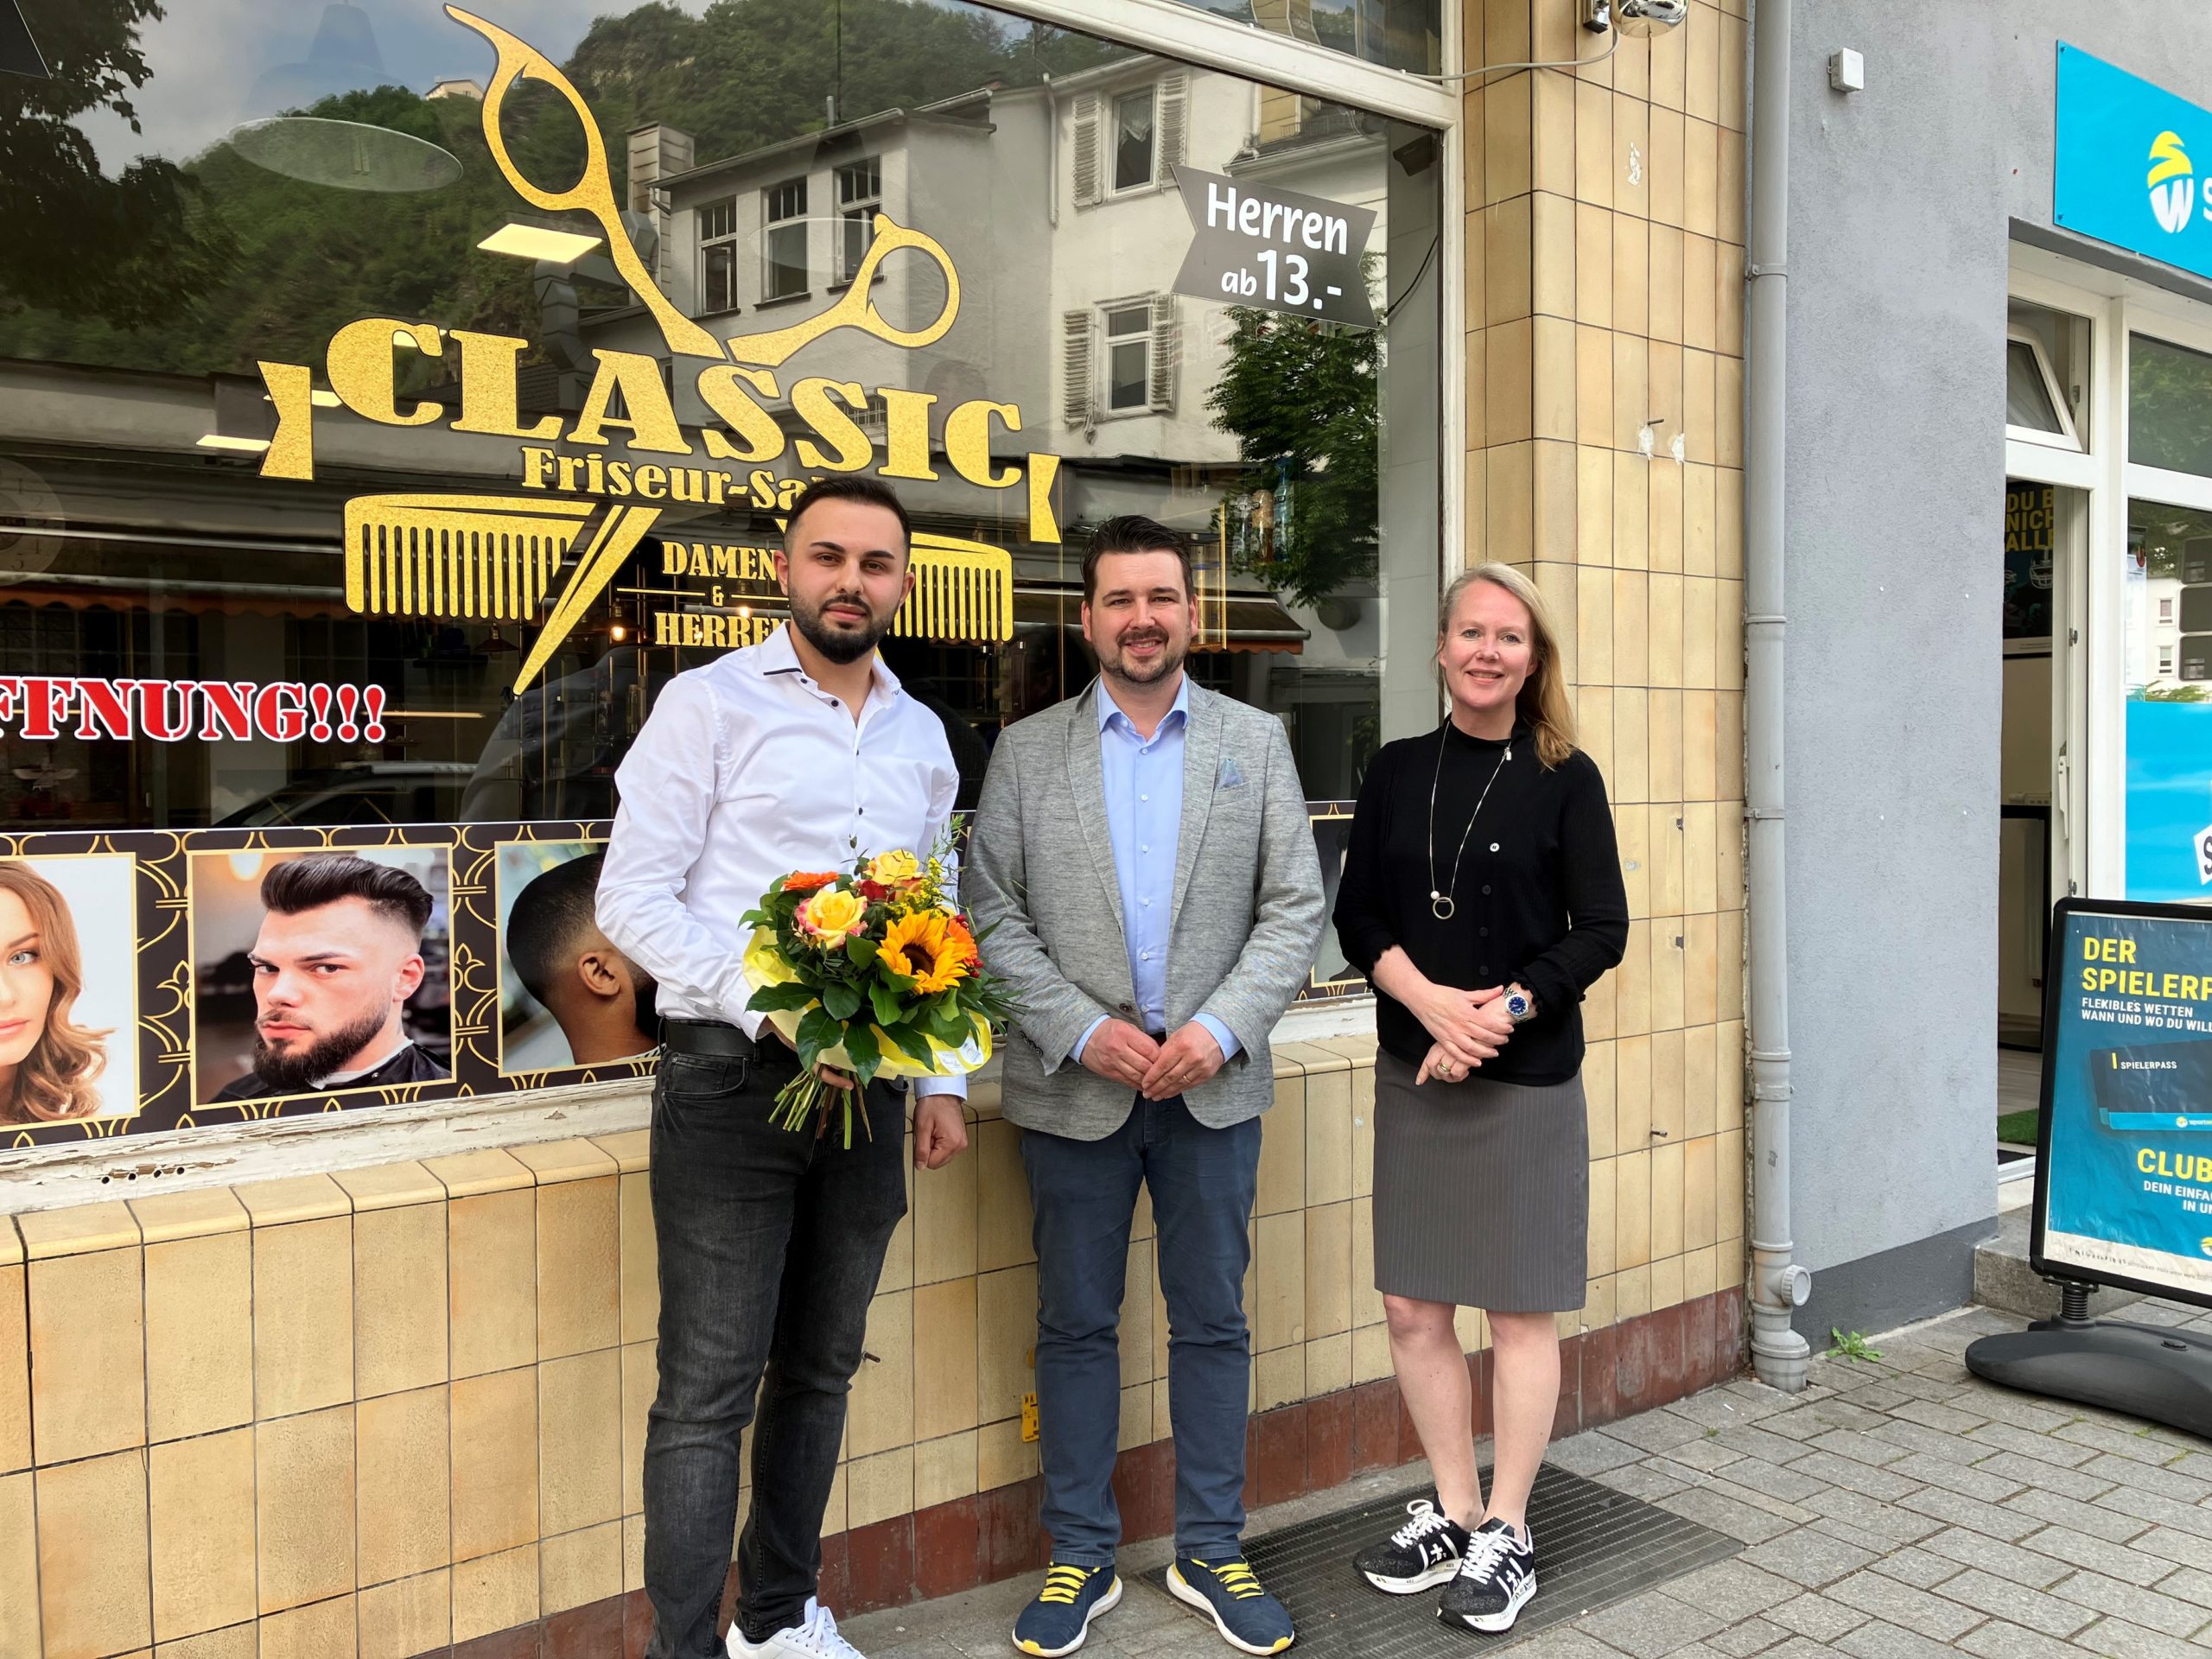 Classic Friseur-Salon in der Bad Emser Bahnhofstraße eröffnet